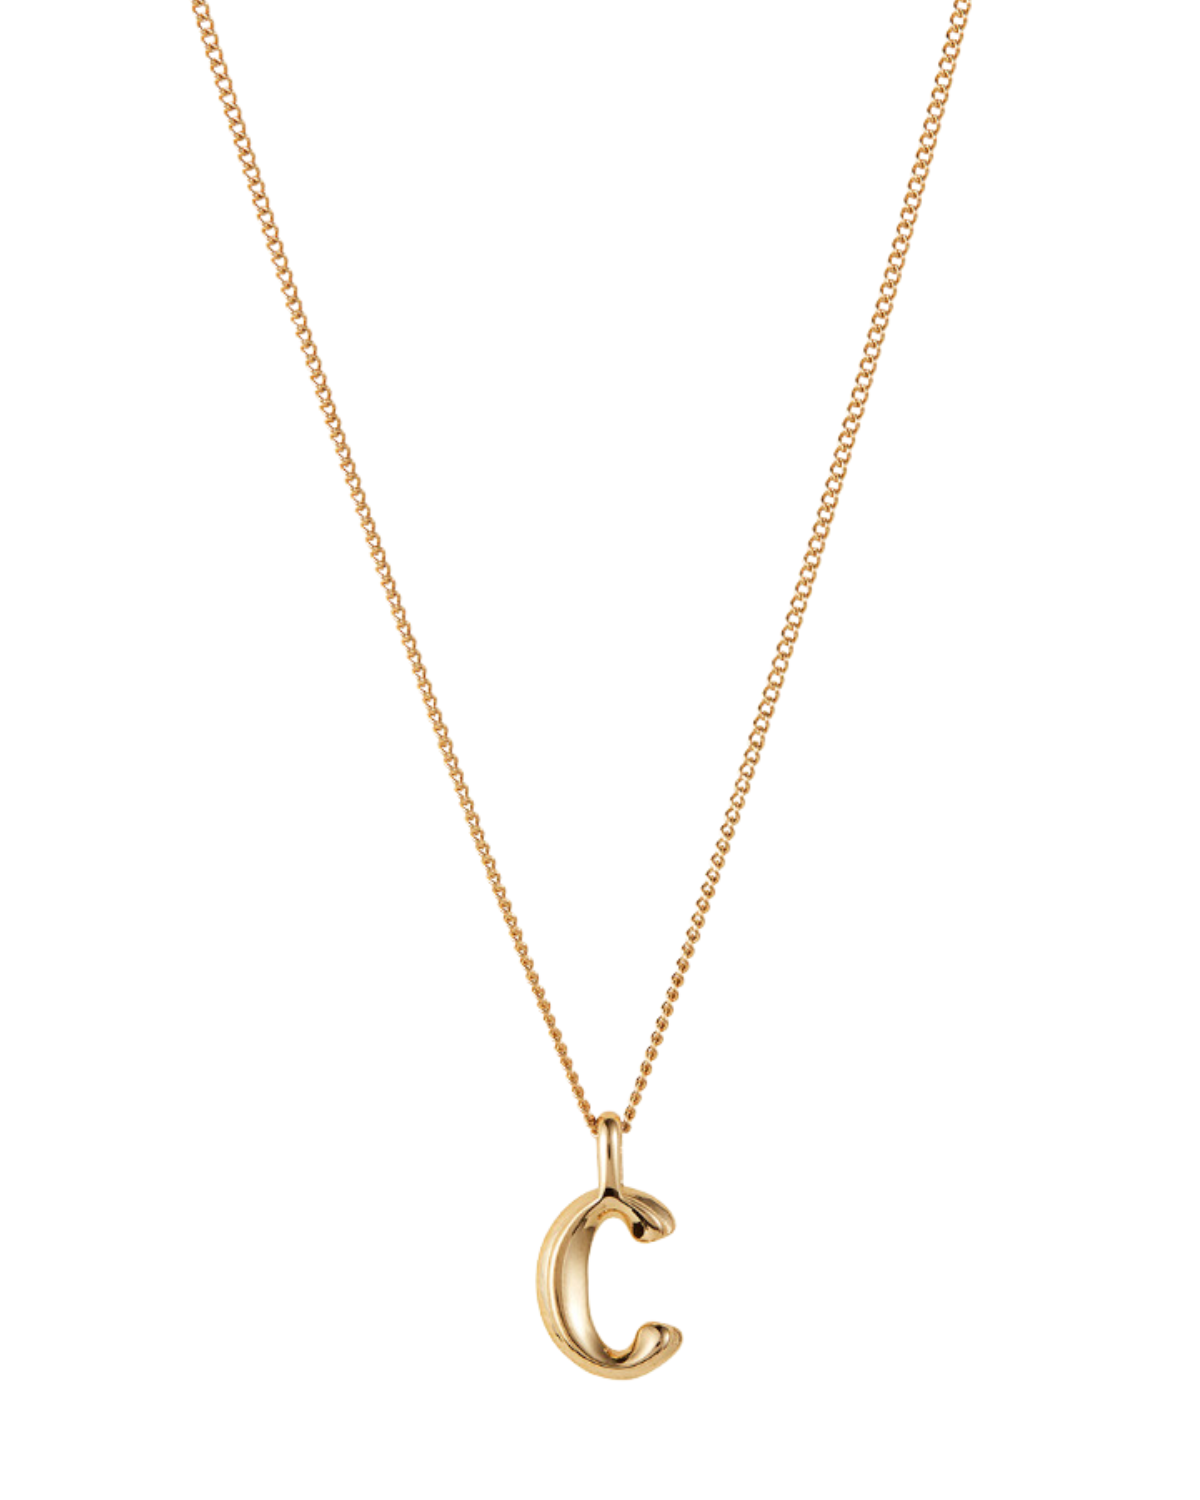 Monogram Necklace - C (Gold)